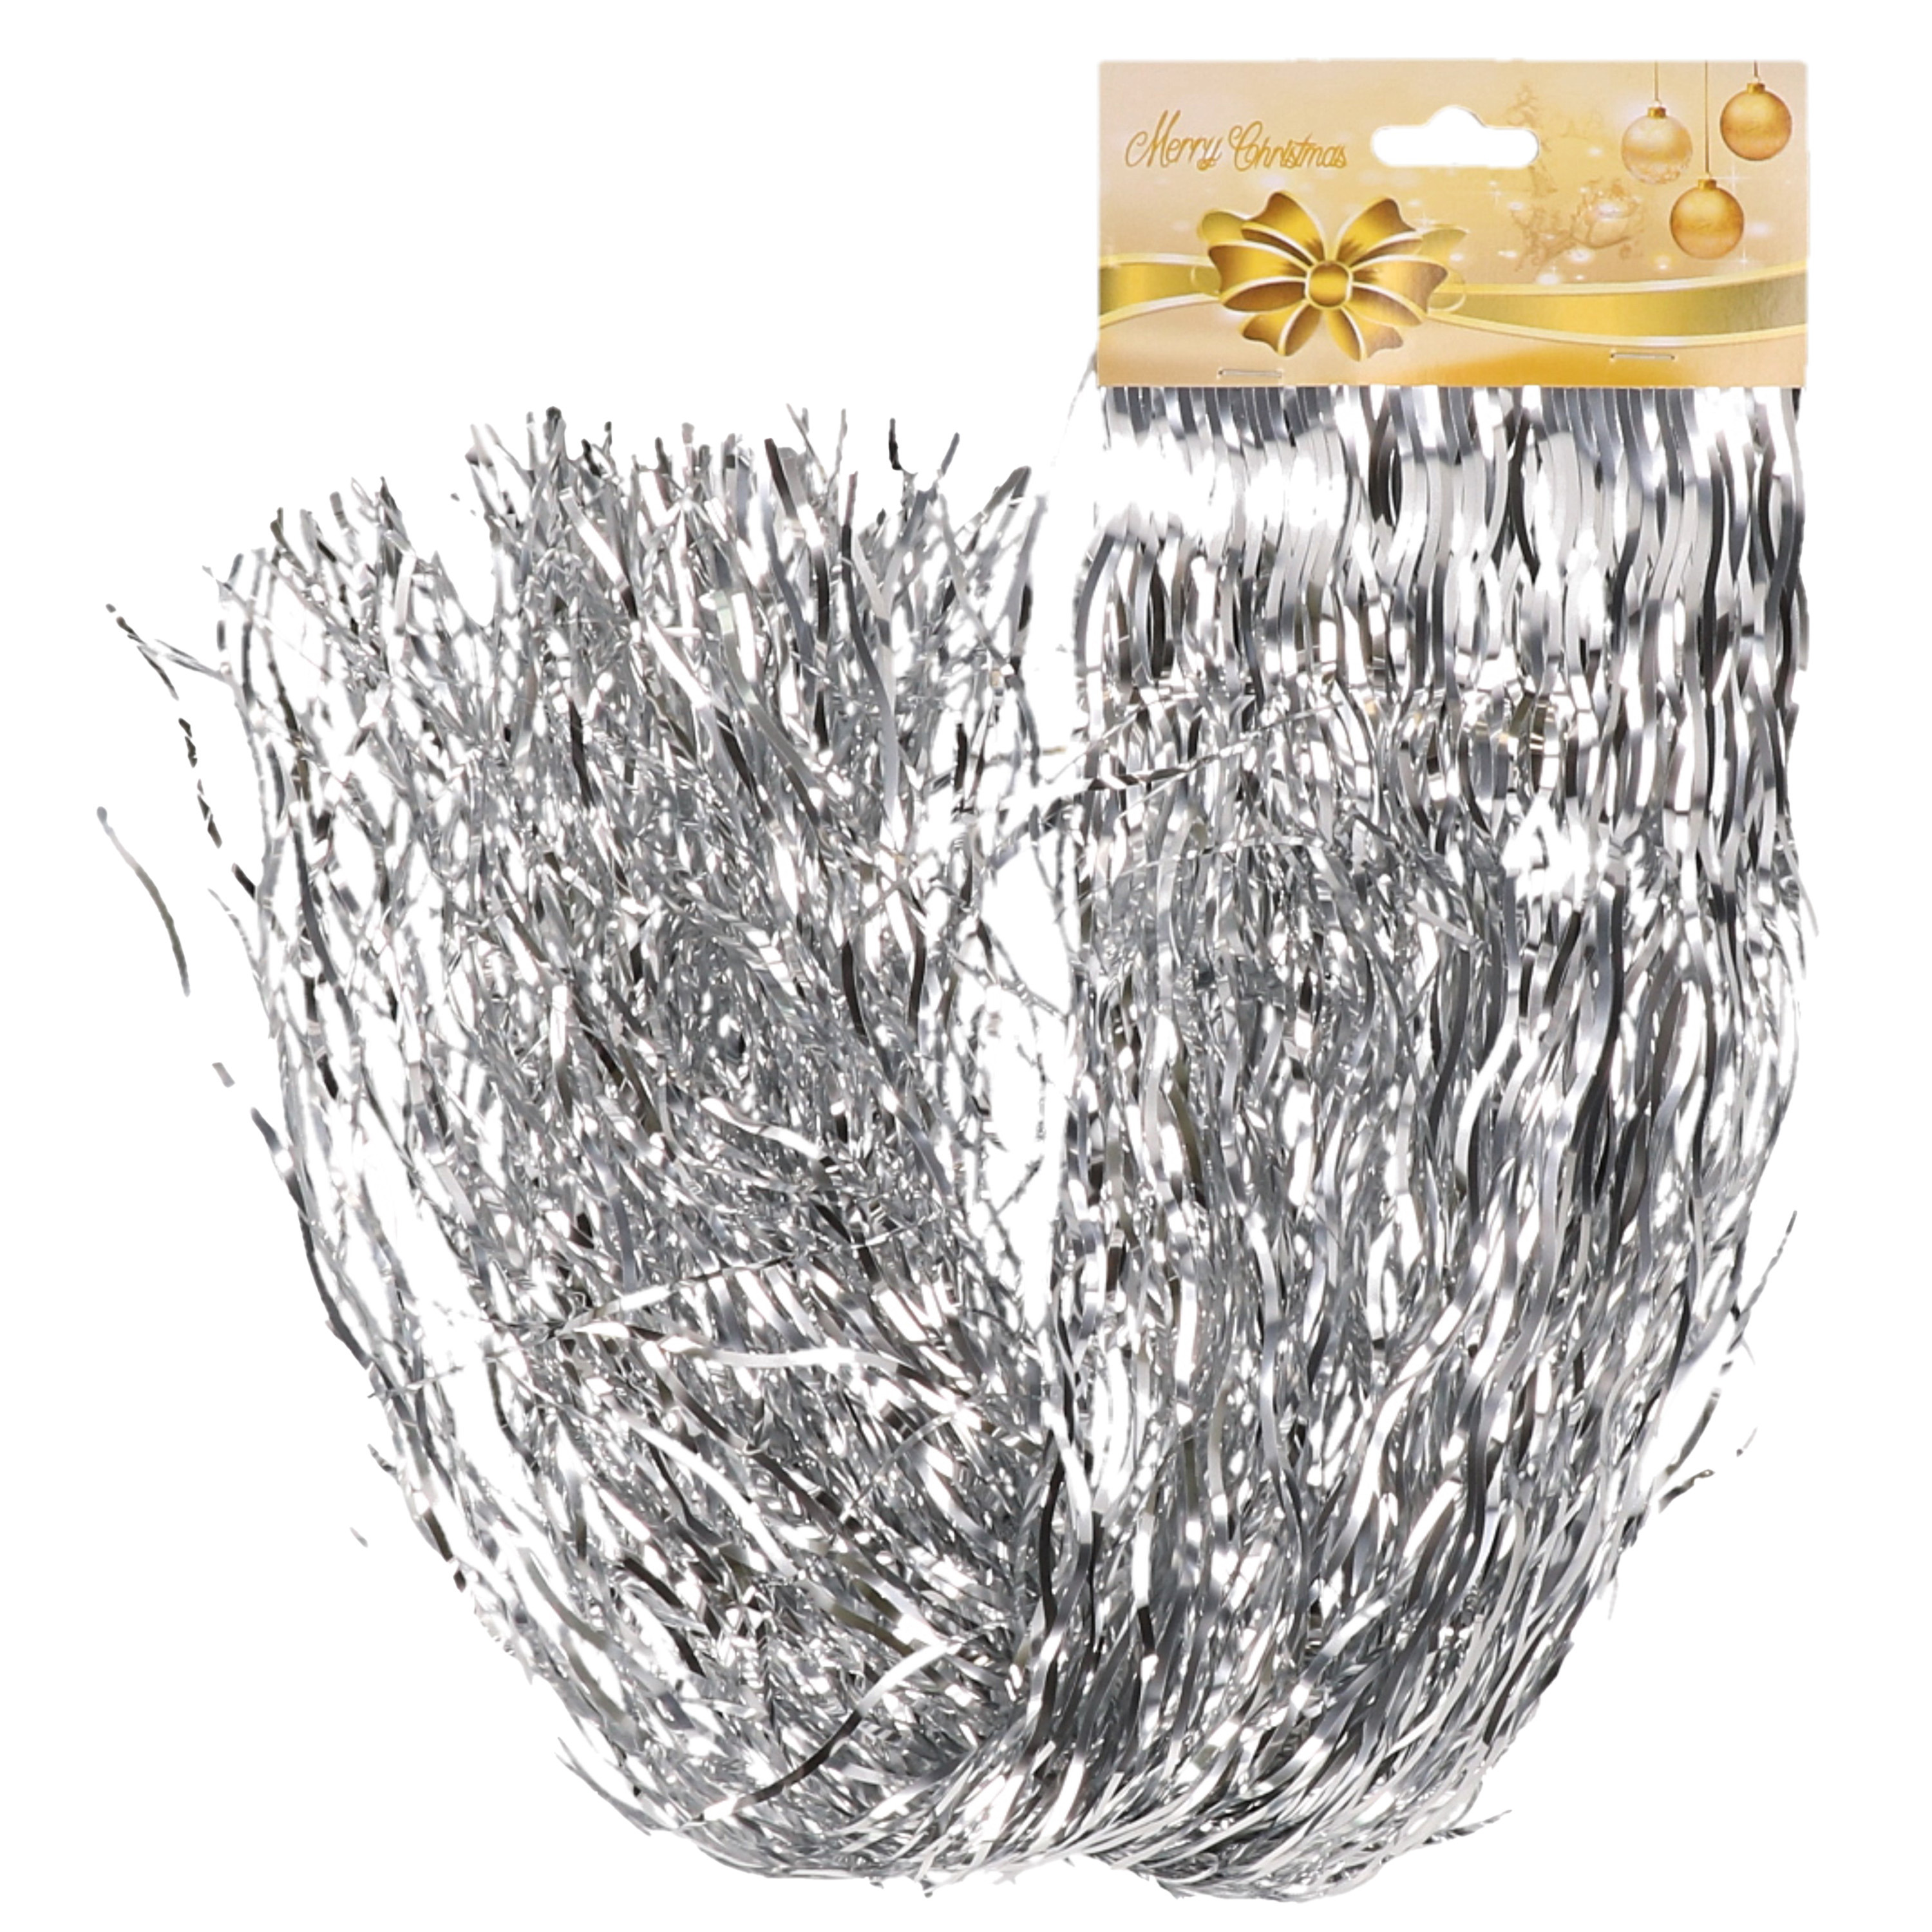 Engelenhaar-lametta slierten golf zilver 50 cm folie kerstboomversiering